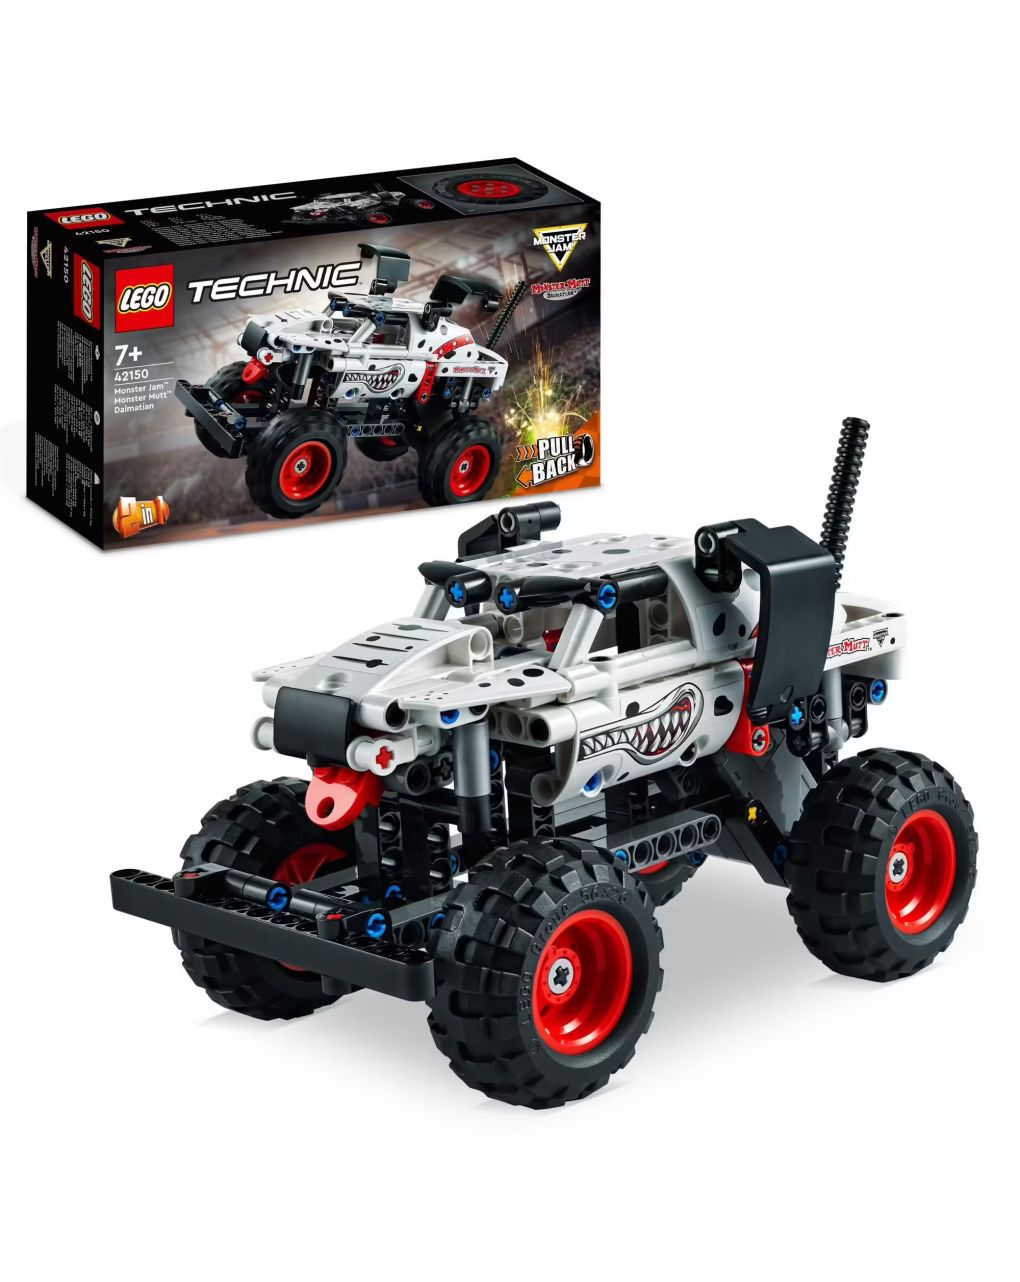 Monster mutt monster jam dalmata - set 2 in 1 con pull-back - auto offroad monster truck e camion giocattolo - lego technic